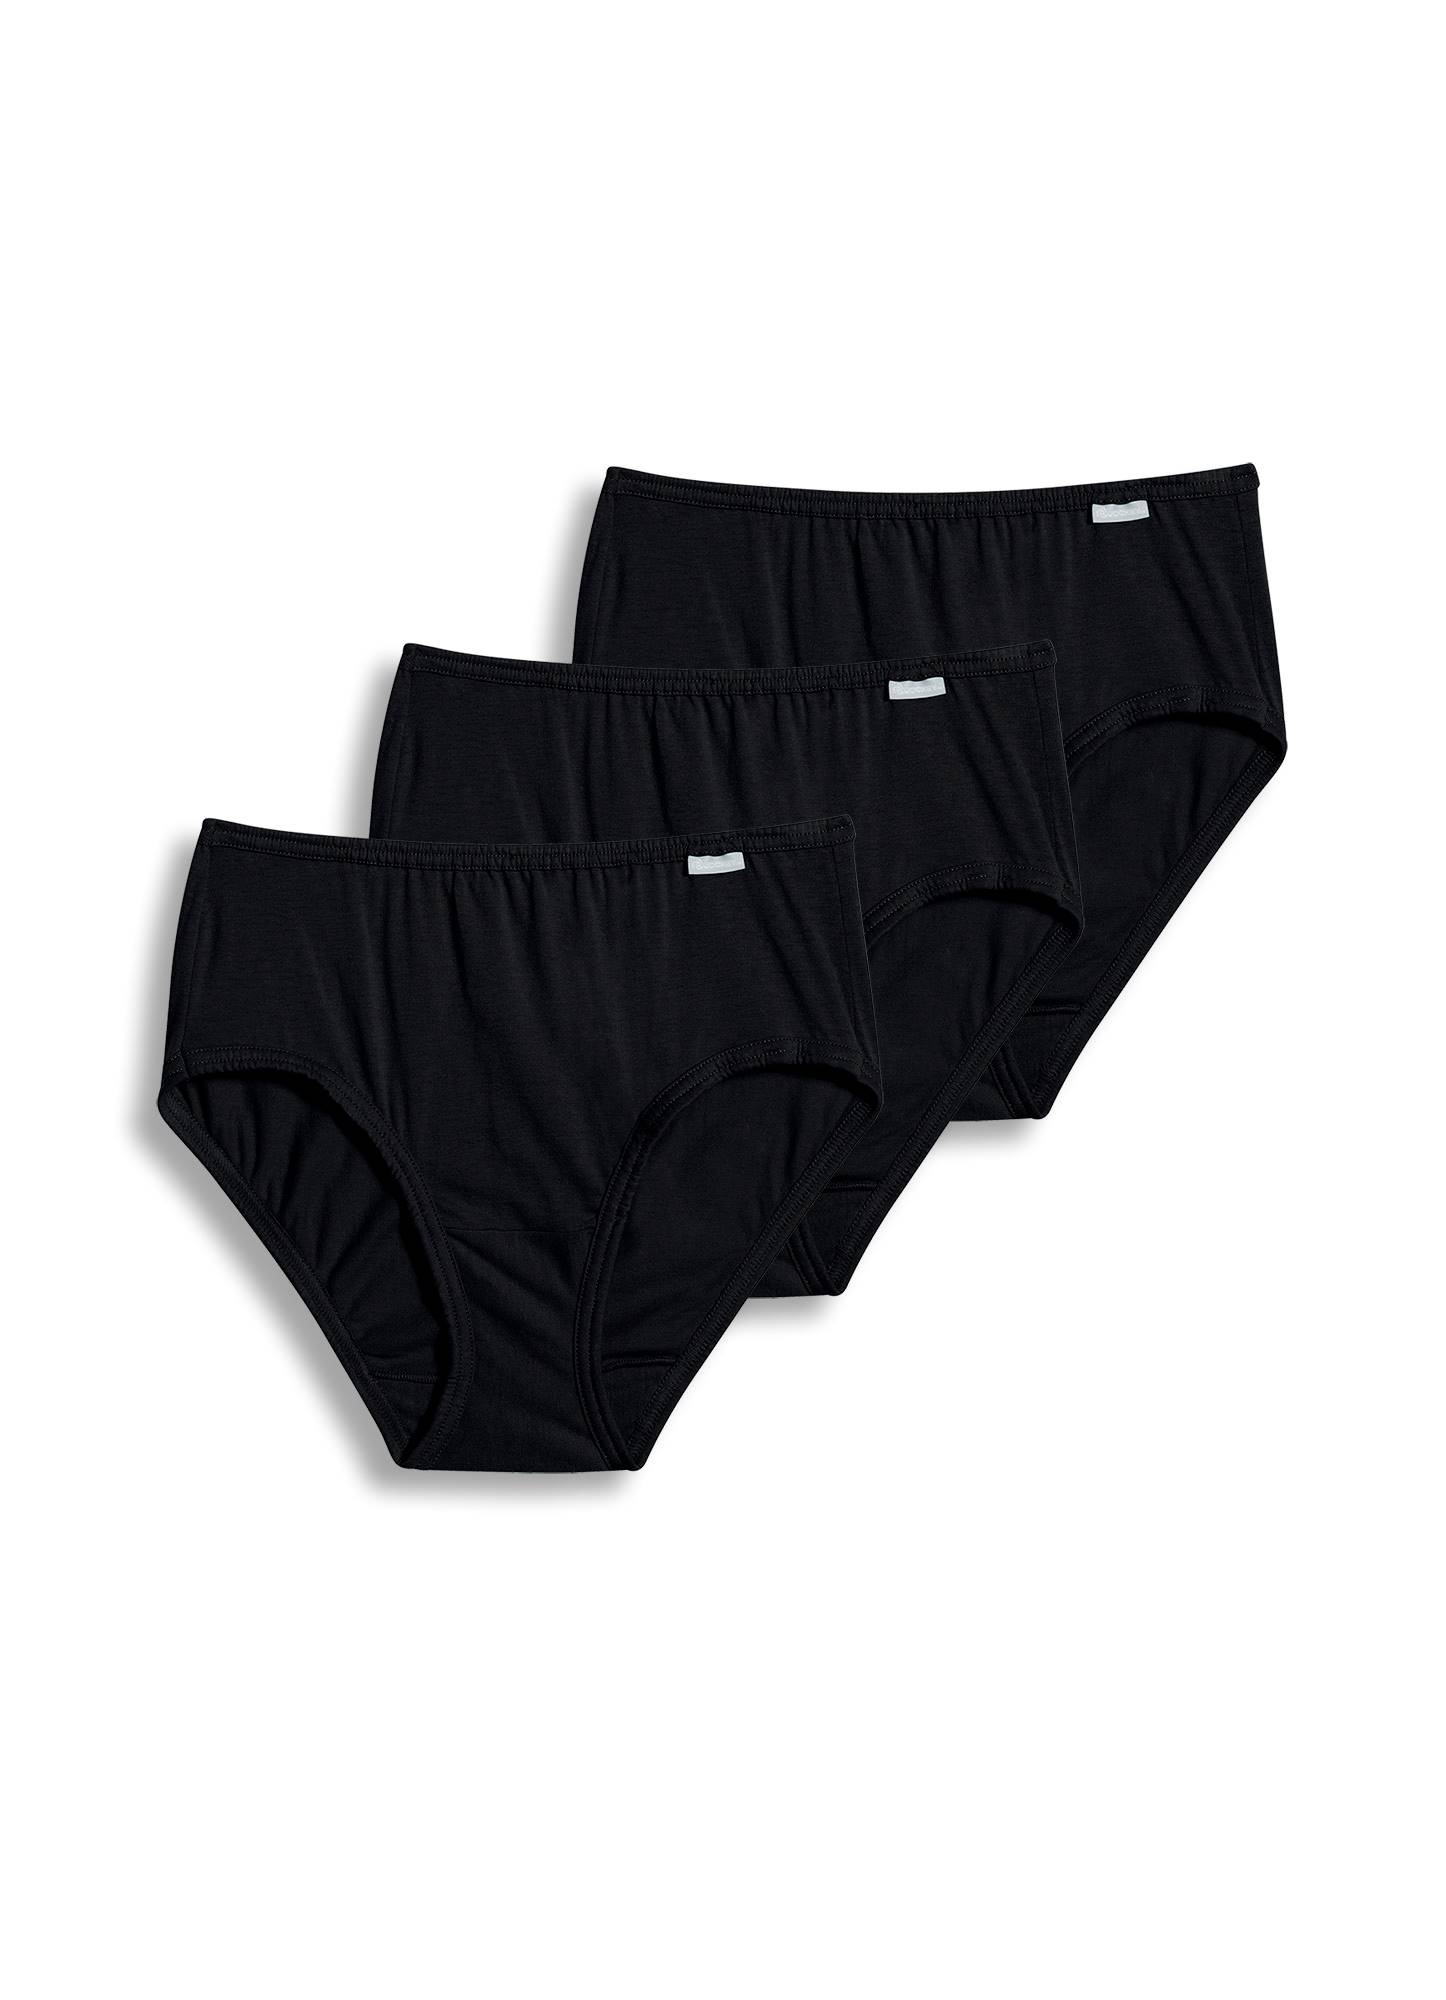 Jockey Women's size 9 Underwear Elance Cotton Hipsters 3 Pack